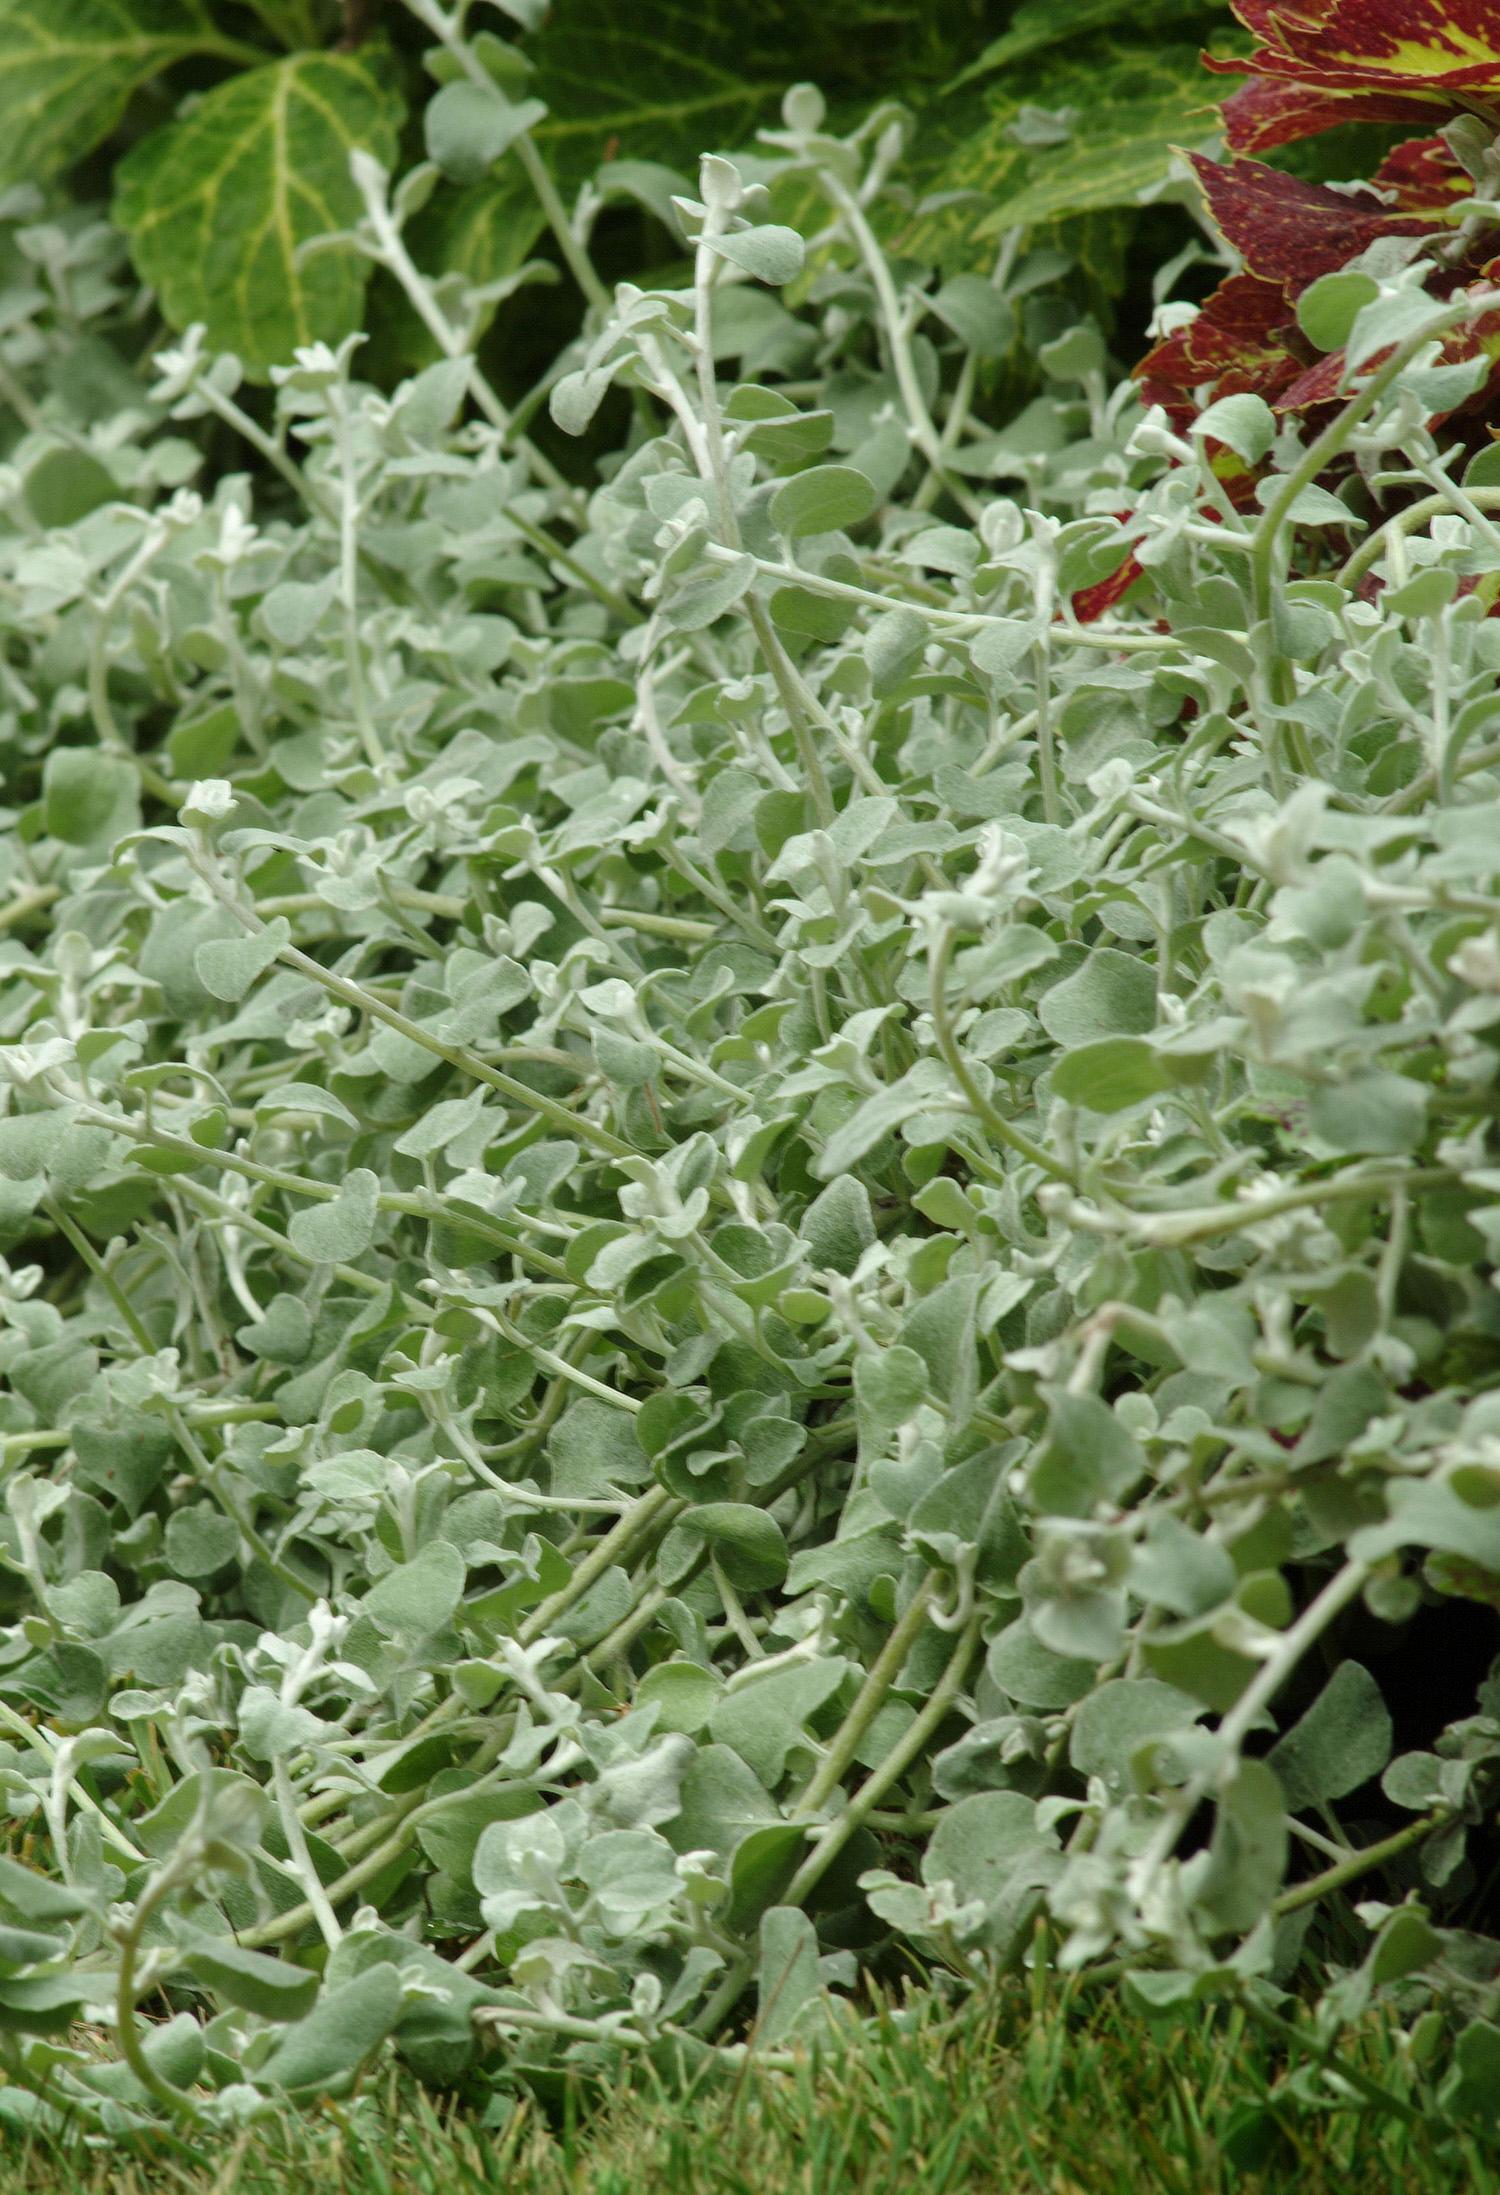 Vining Dusty Miller Helichrysum from Hoods Gardens